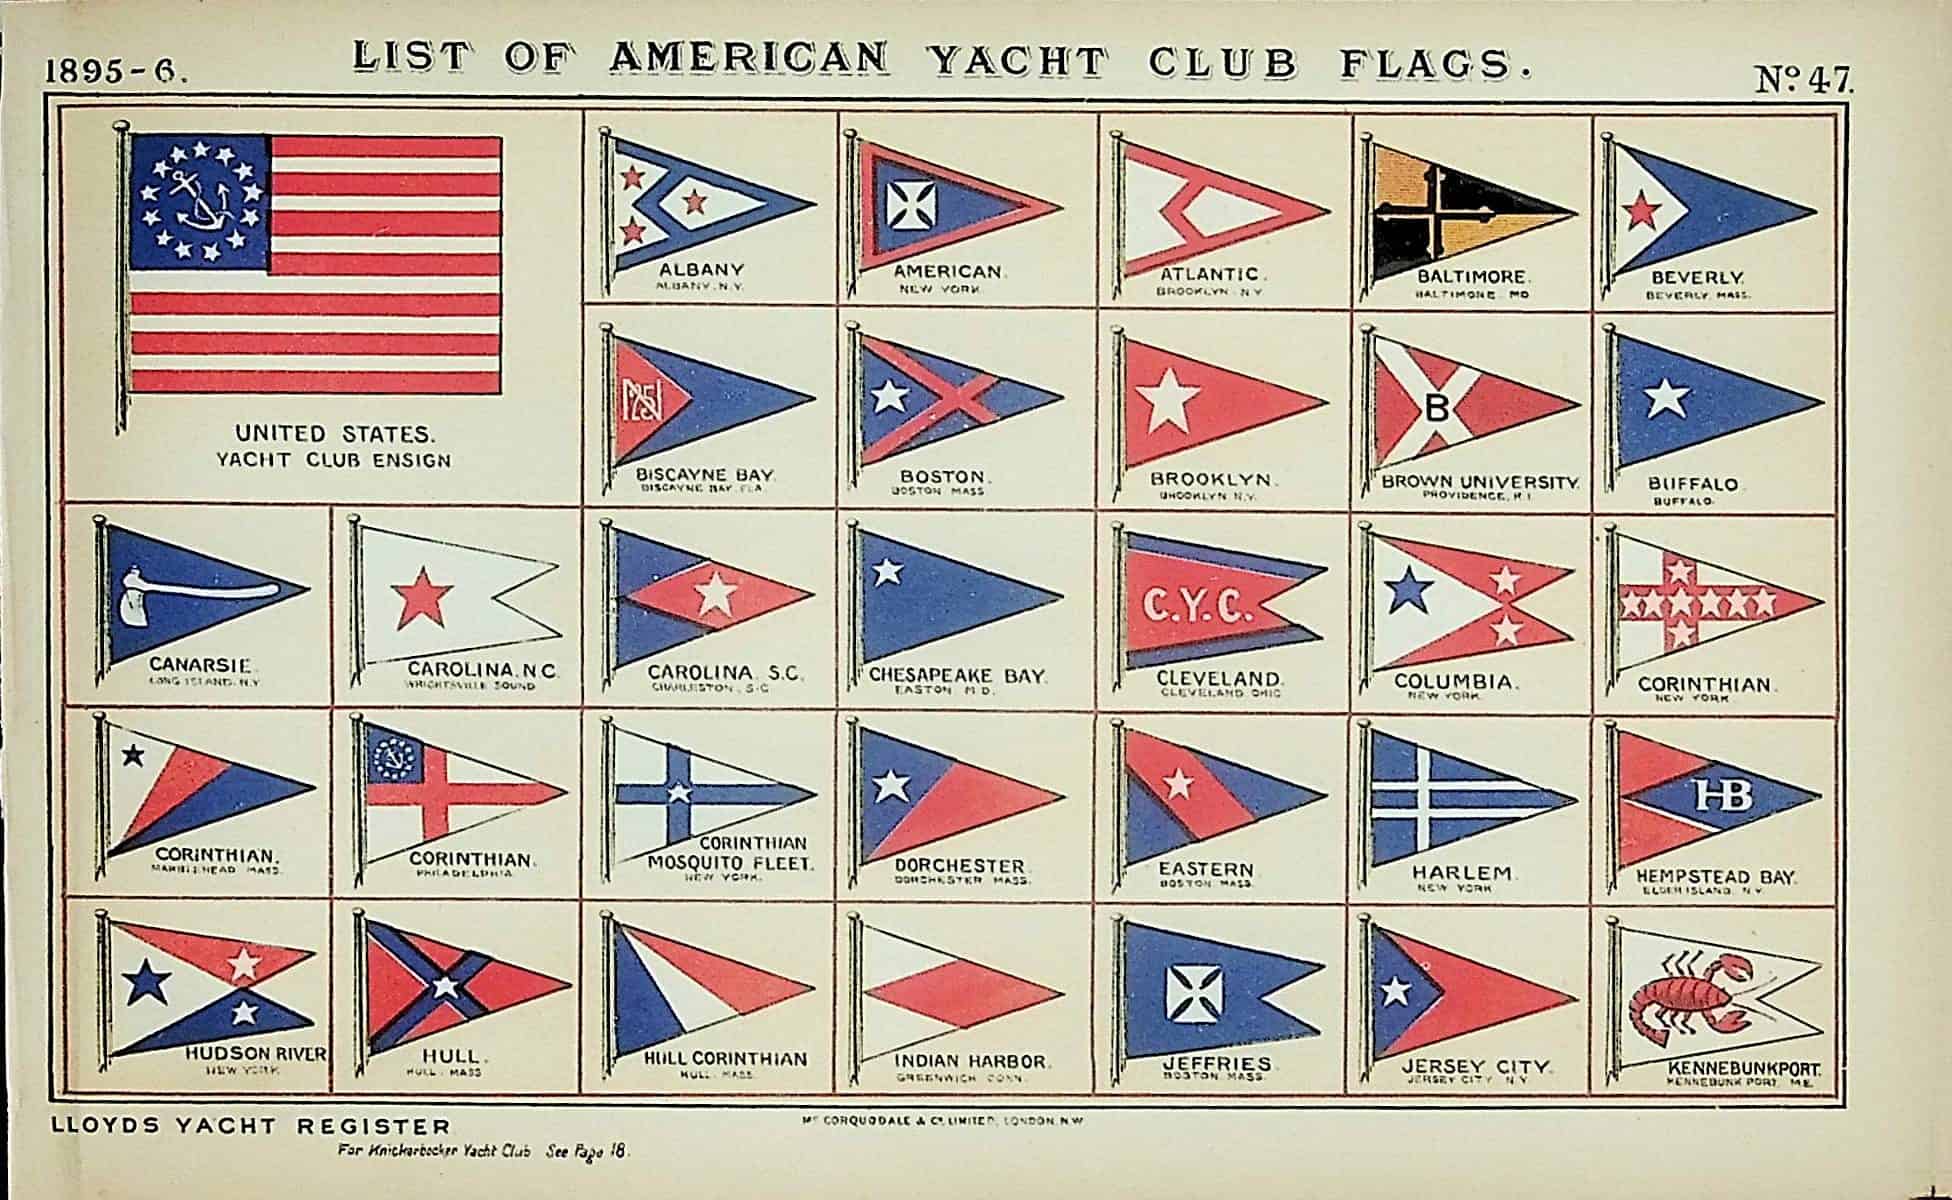 new york yacht club flag etiquette